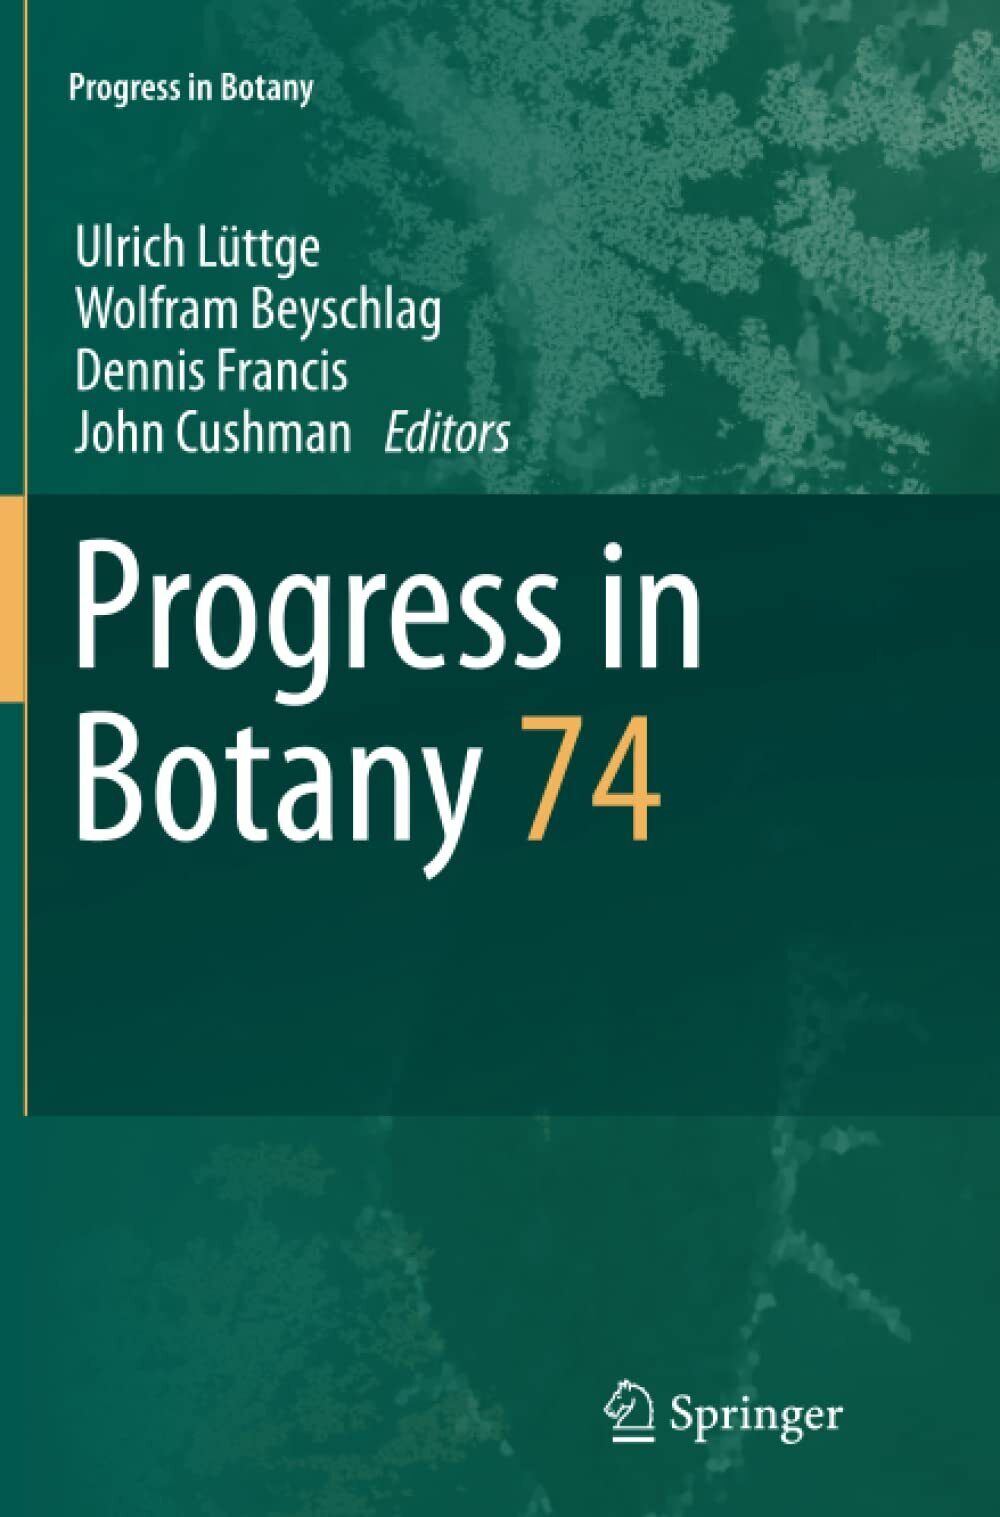 Progress in Botany: Vol. 74 - Ulrich L?ttge - Springer, 2014